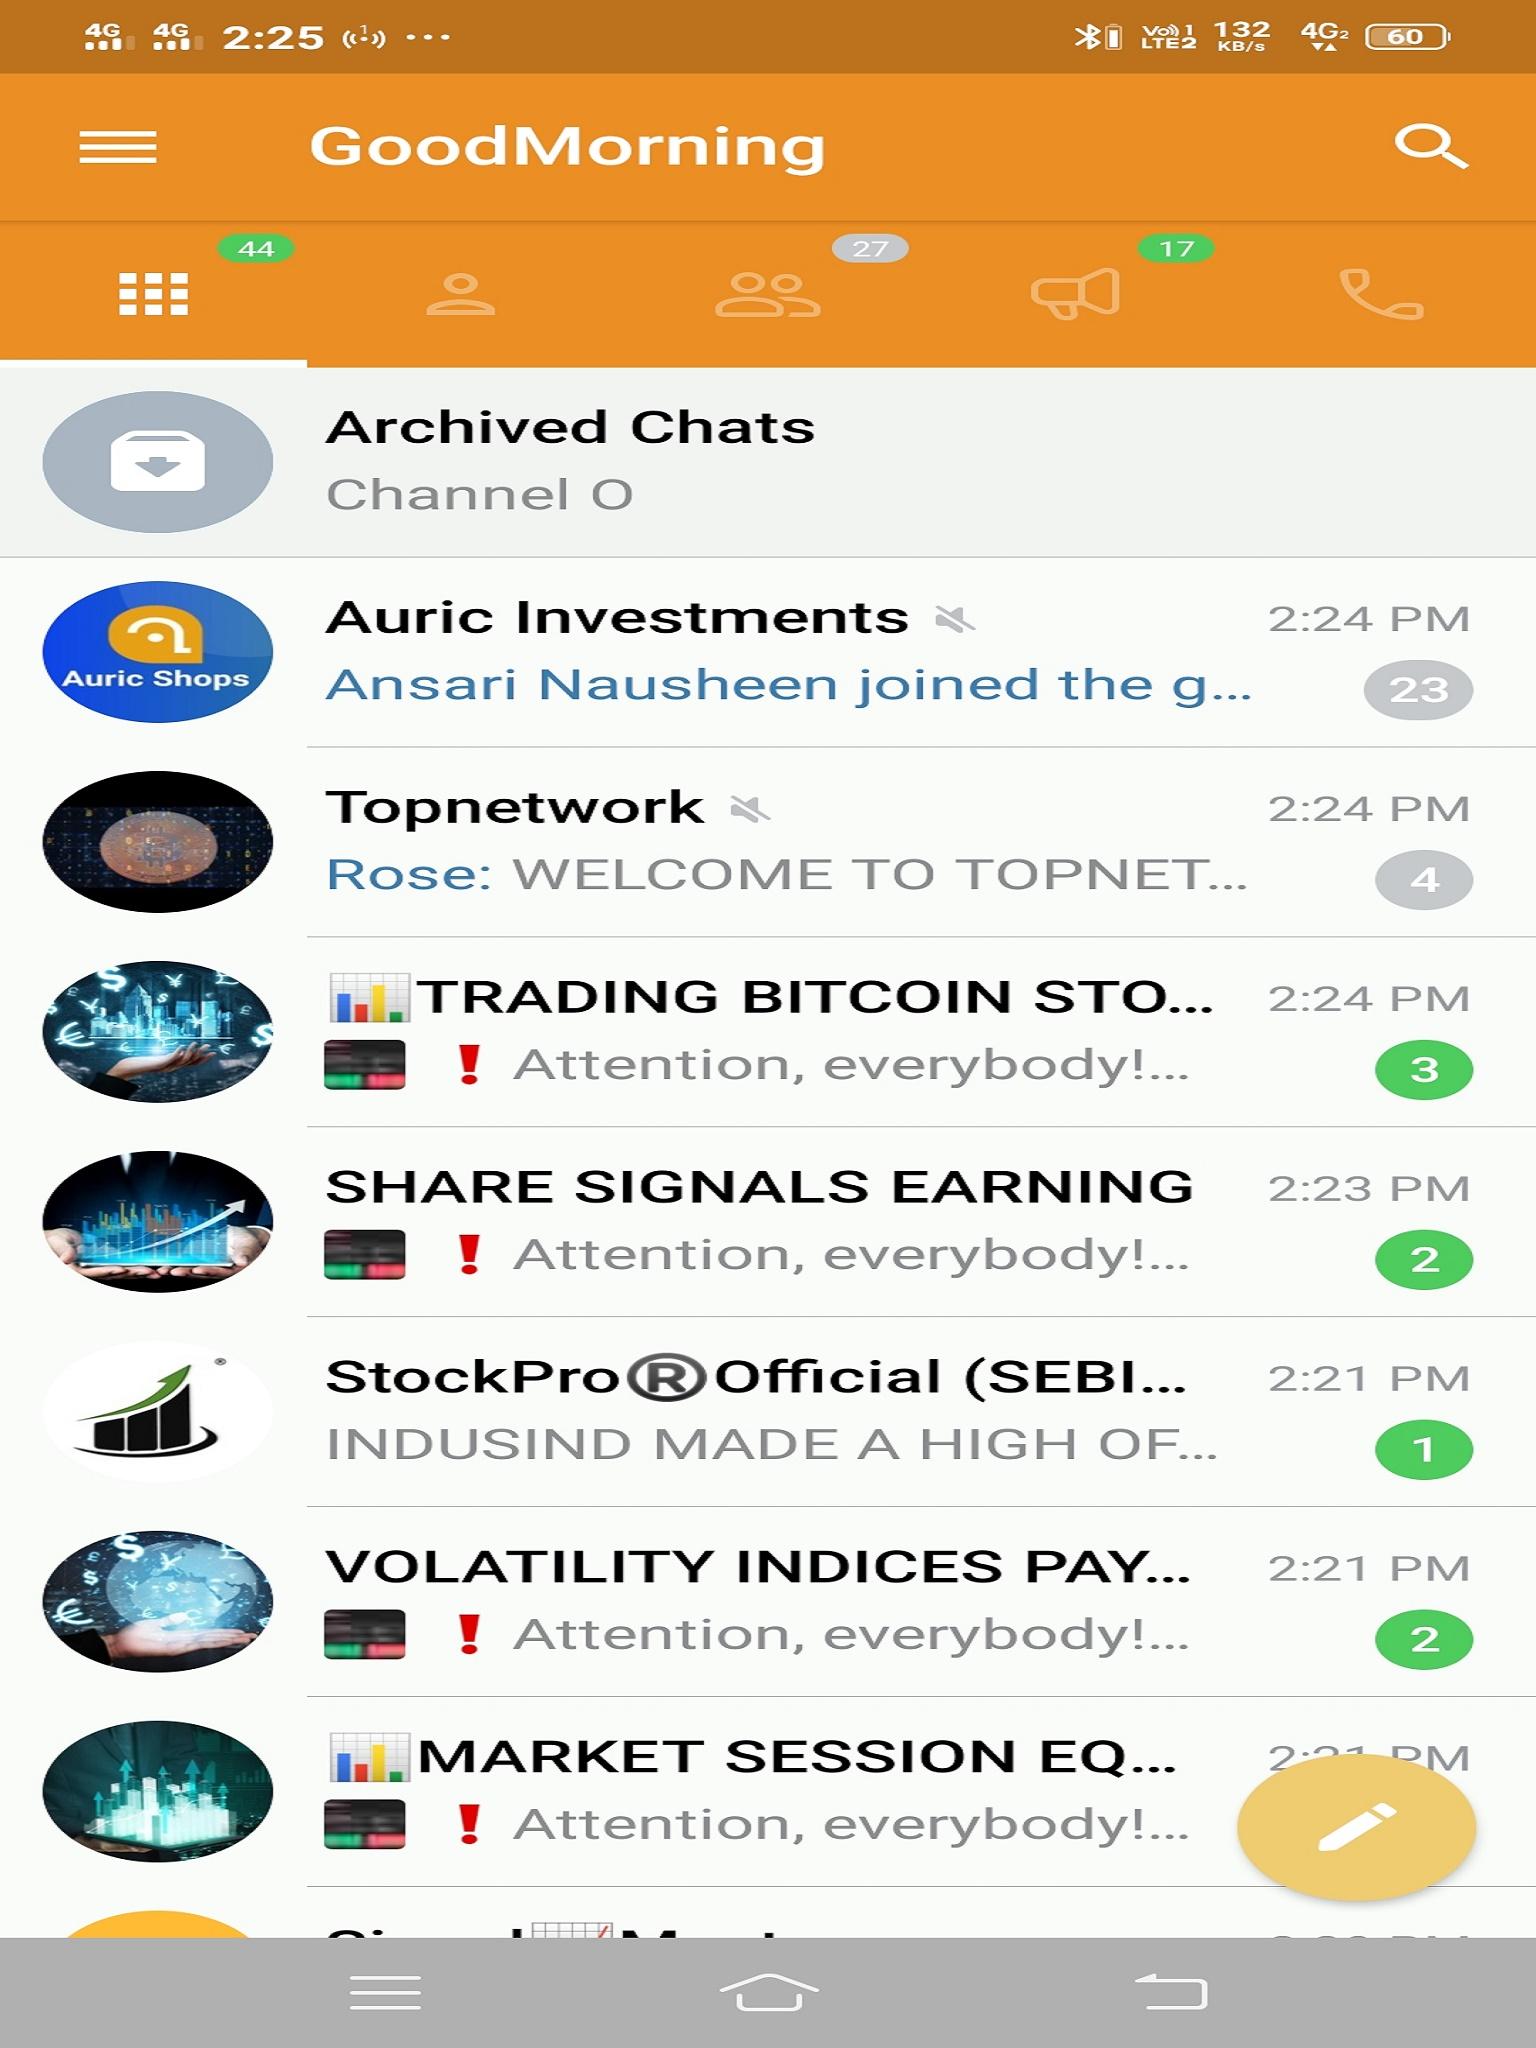 GoodMorning Messenger - New Telegram 1.0.25 Screenshot 7